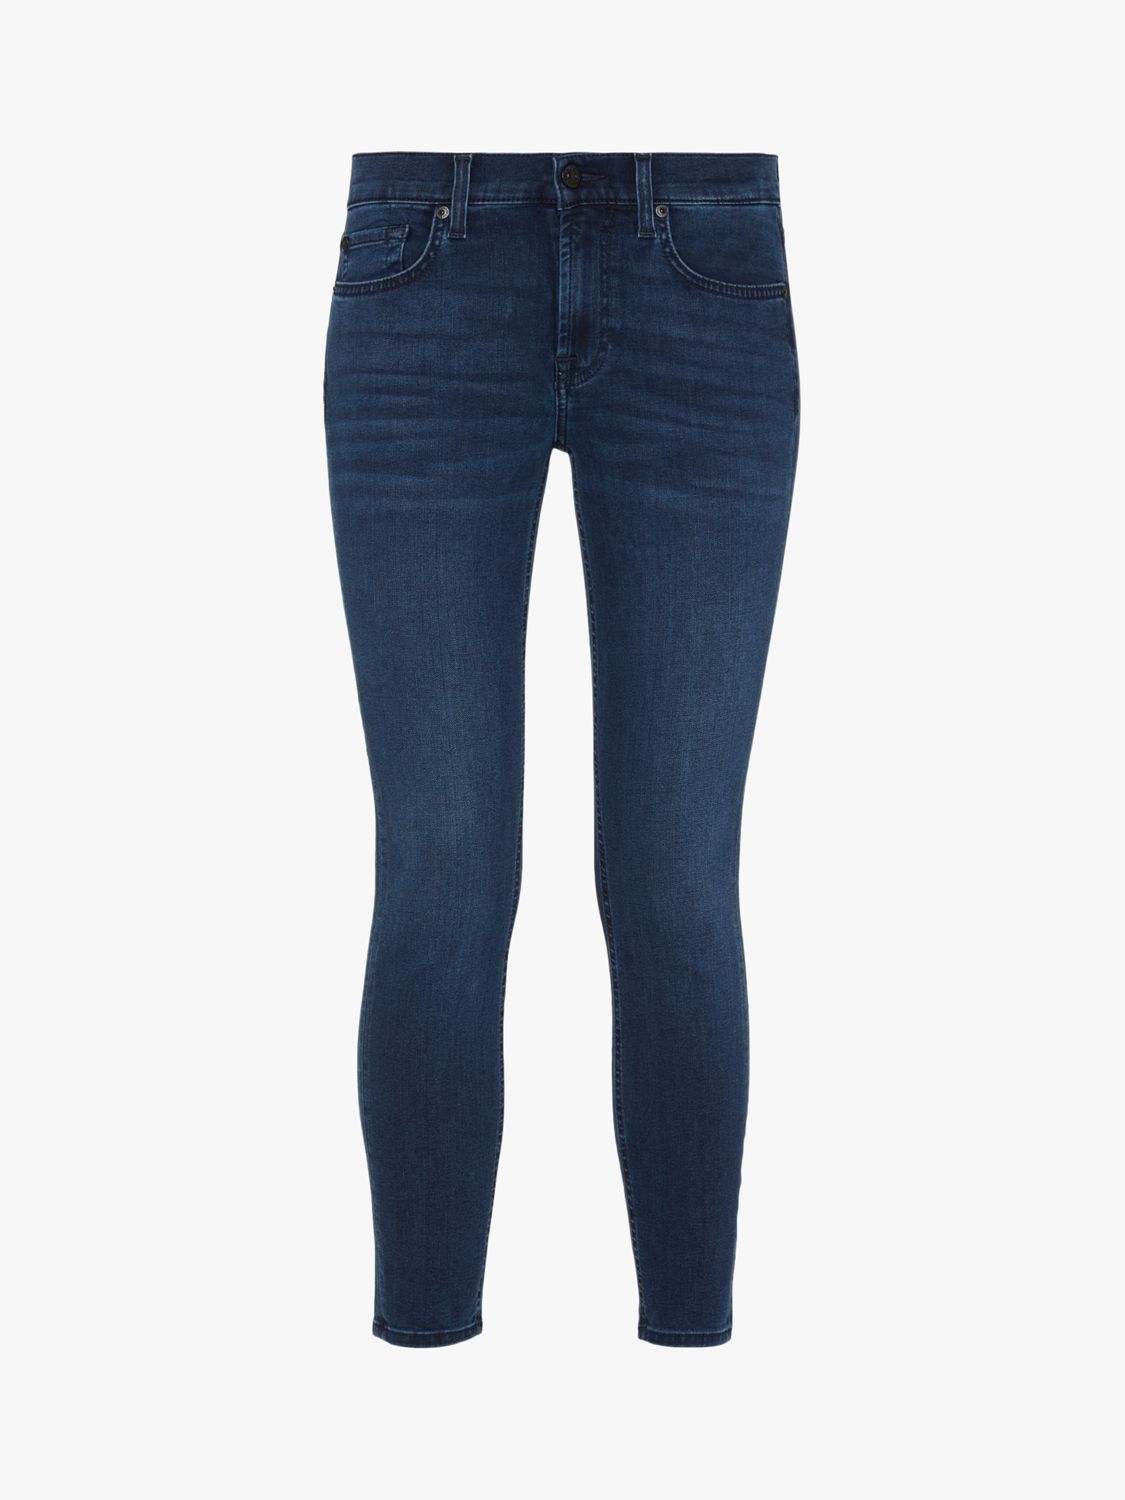 Seven7 Women's Jeans Size 4 Girlfriend Embellished Studded Distressed Blue  Denim